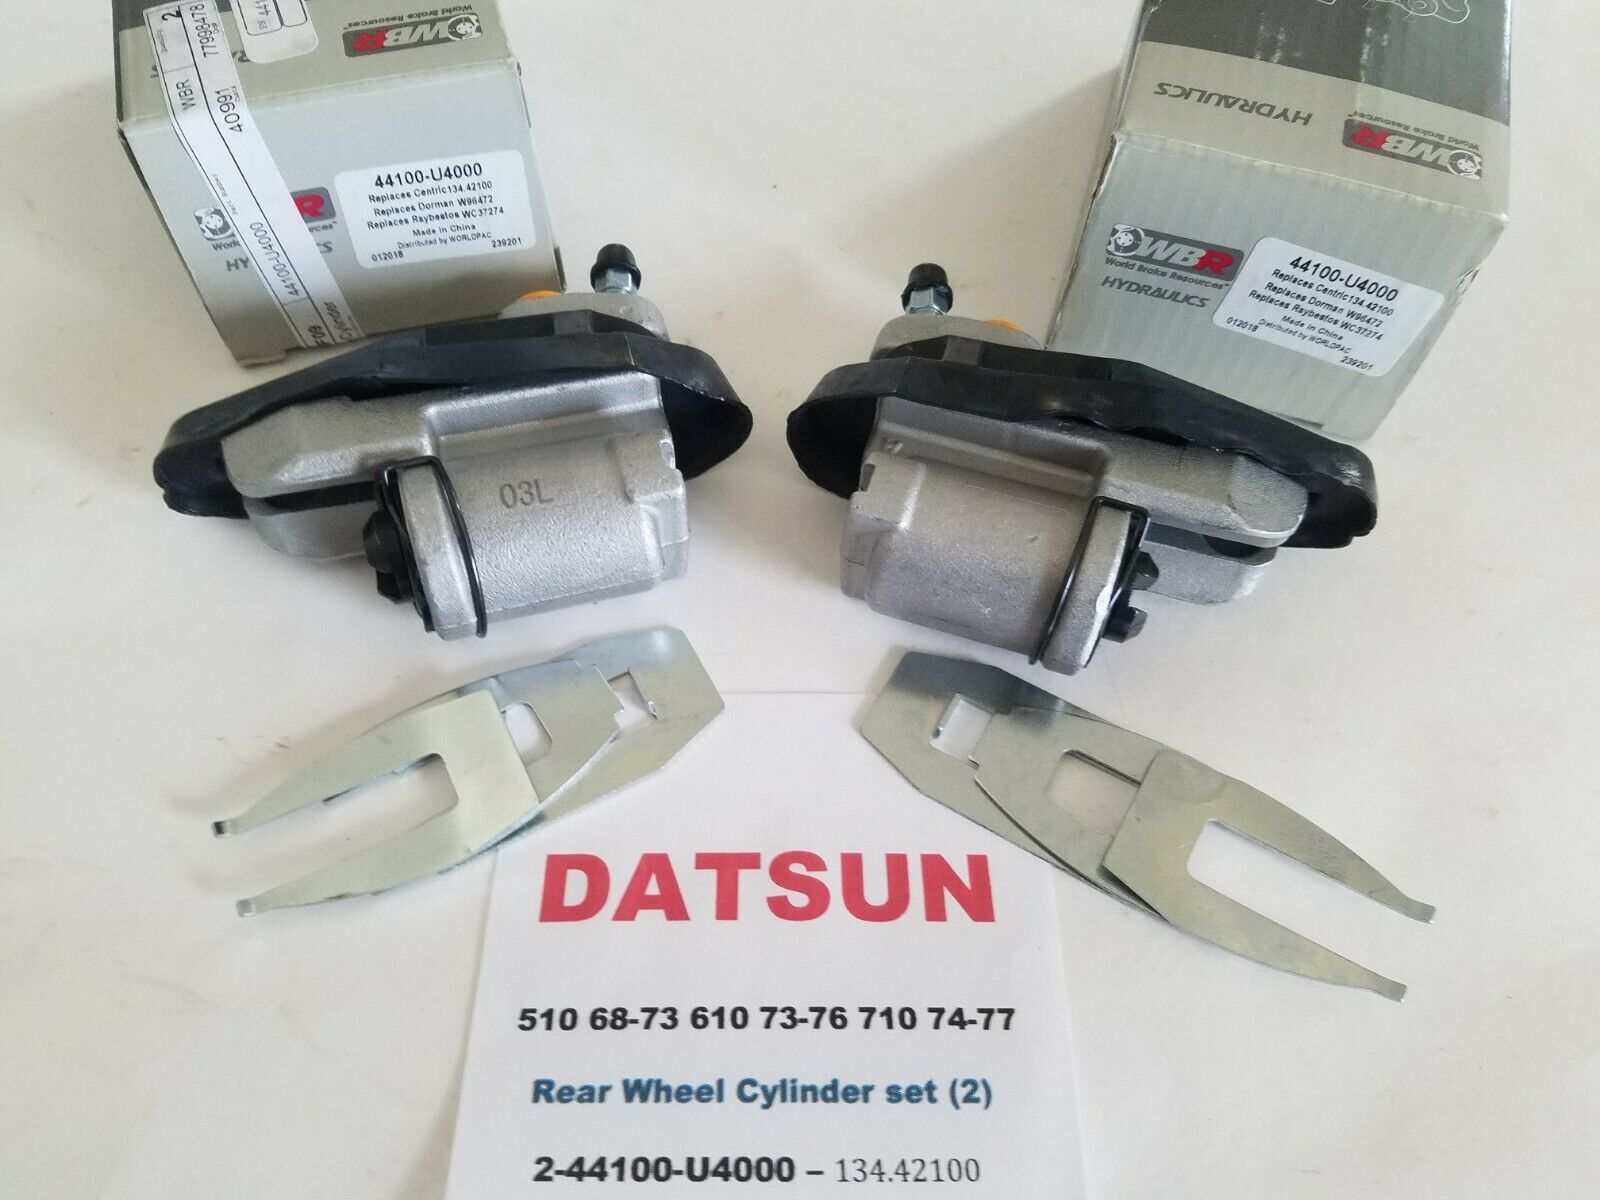 Wheel Cylinder set of (2) fits Datsun 510 68-73 - 610 73-76 - 710 74-77 - U4000